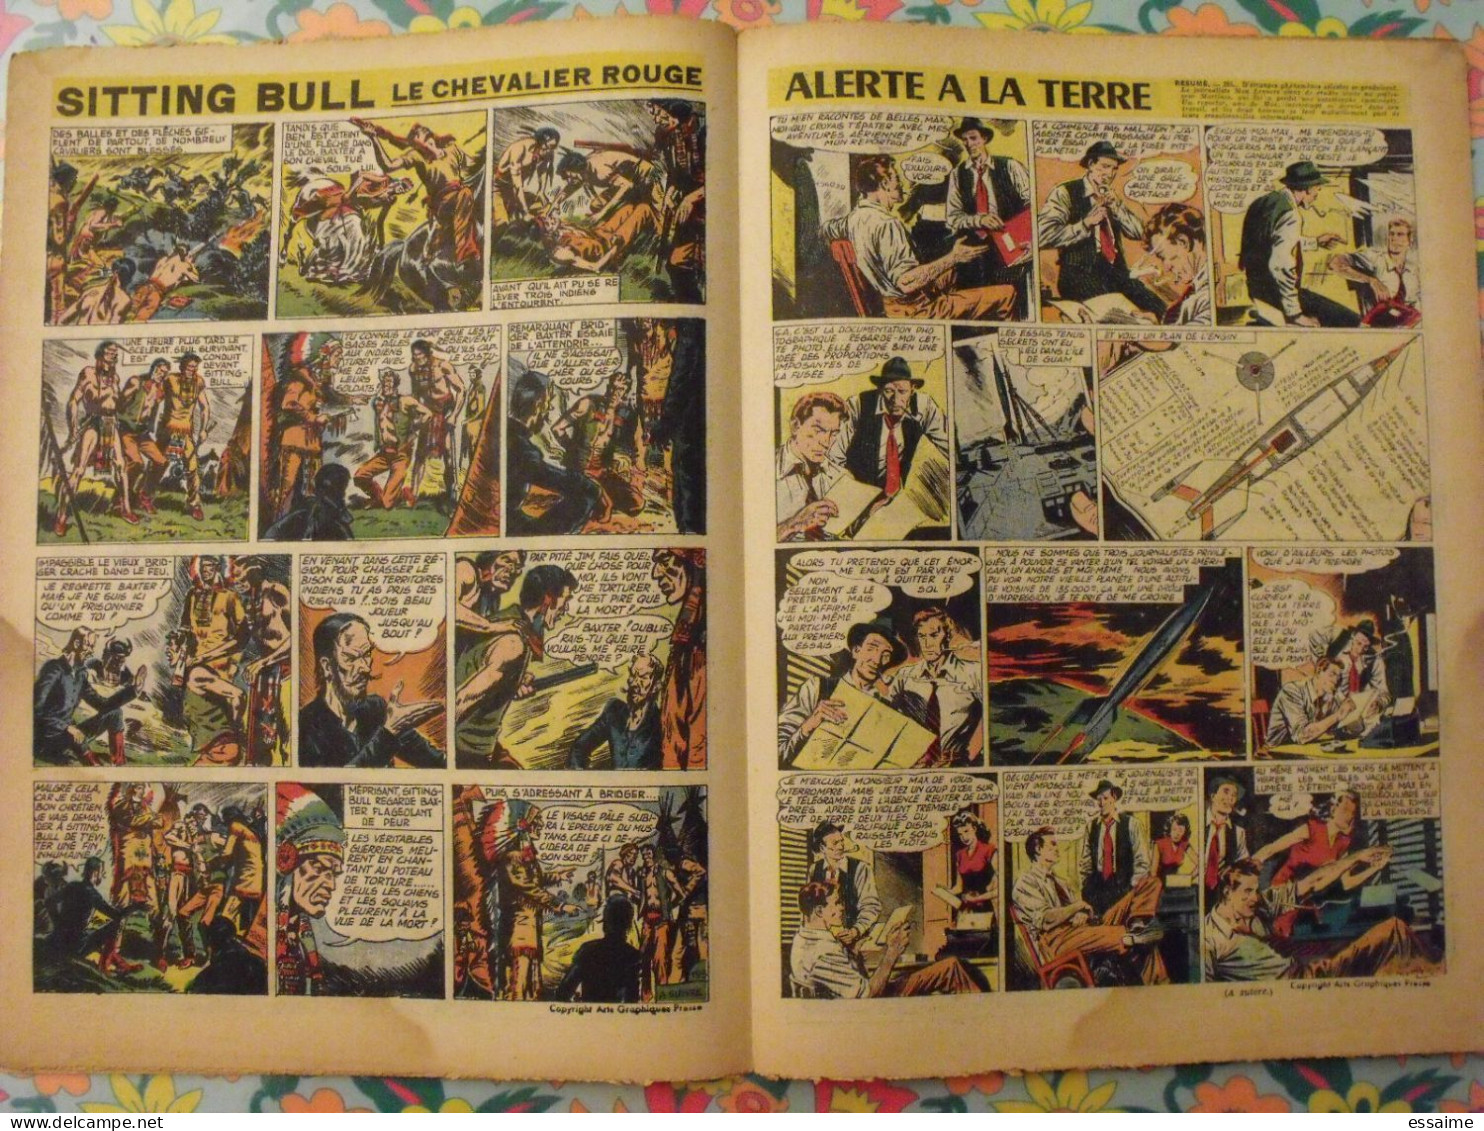 5 numéros de Coq Hardi de 1951. Sitting Bull, flamberge, roland, foufou, baby baluchon mat. A redécouvrir